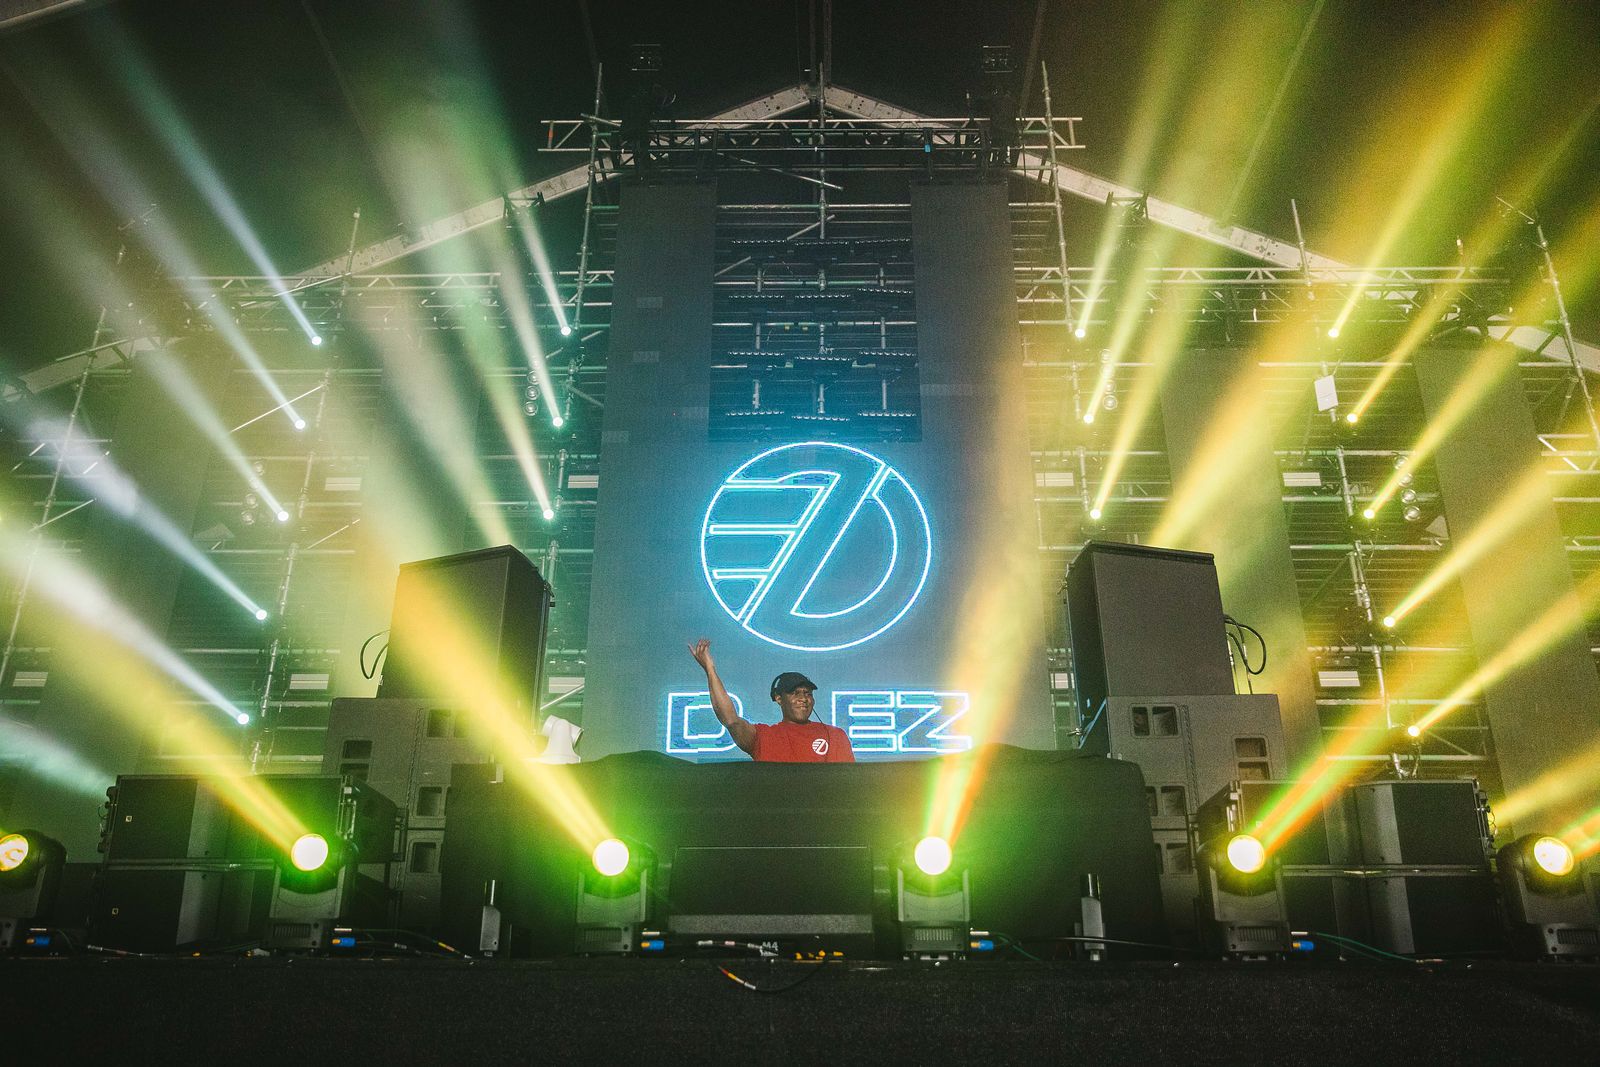 DJ EZ